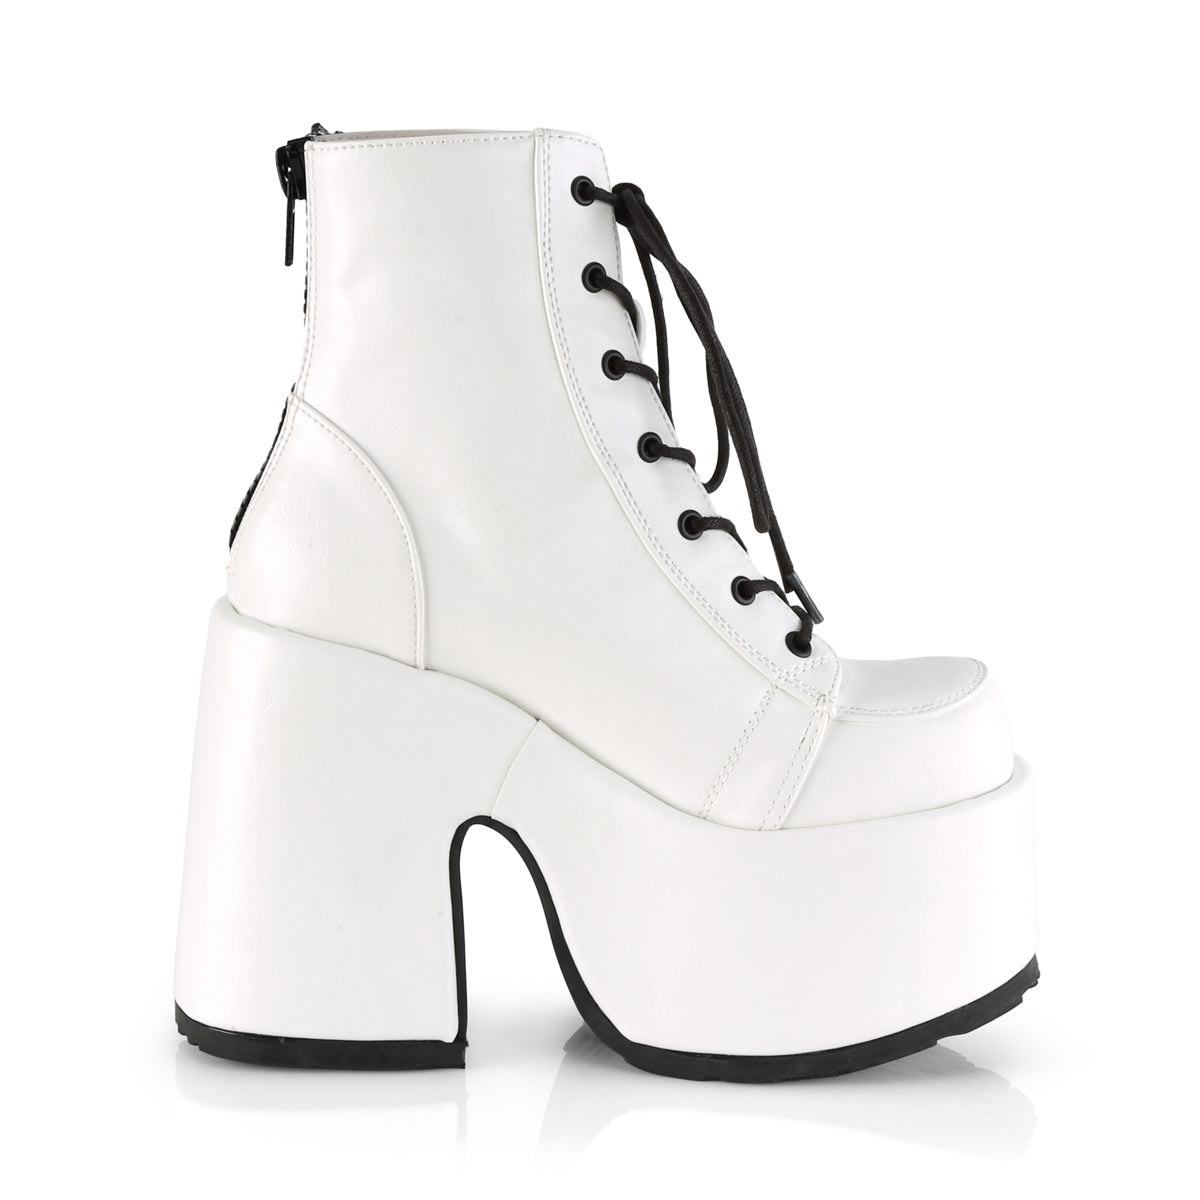 CAMEL-203 Demonia White Vegan Leather Women's Ankle Boots [Demonia Cult Alternative Footwear]